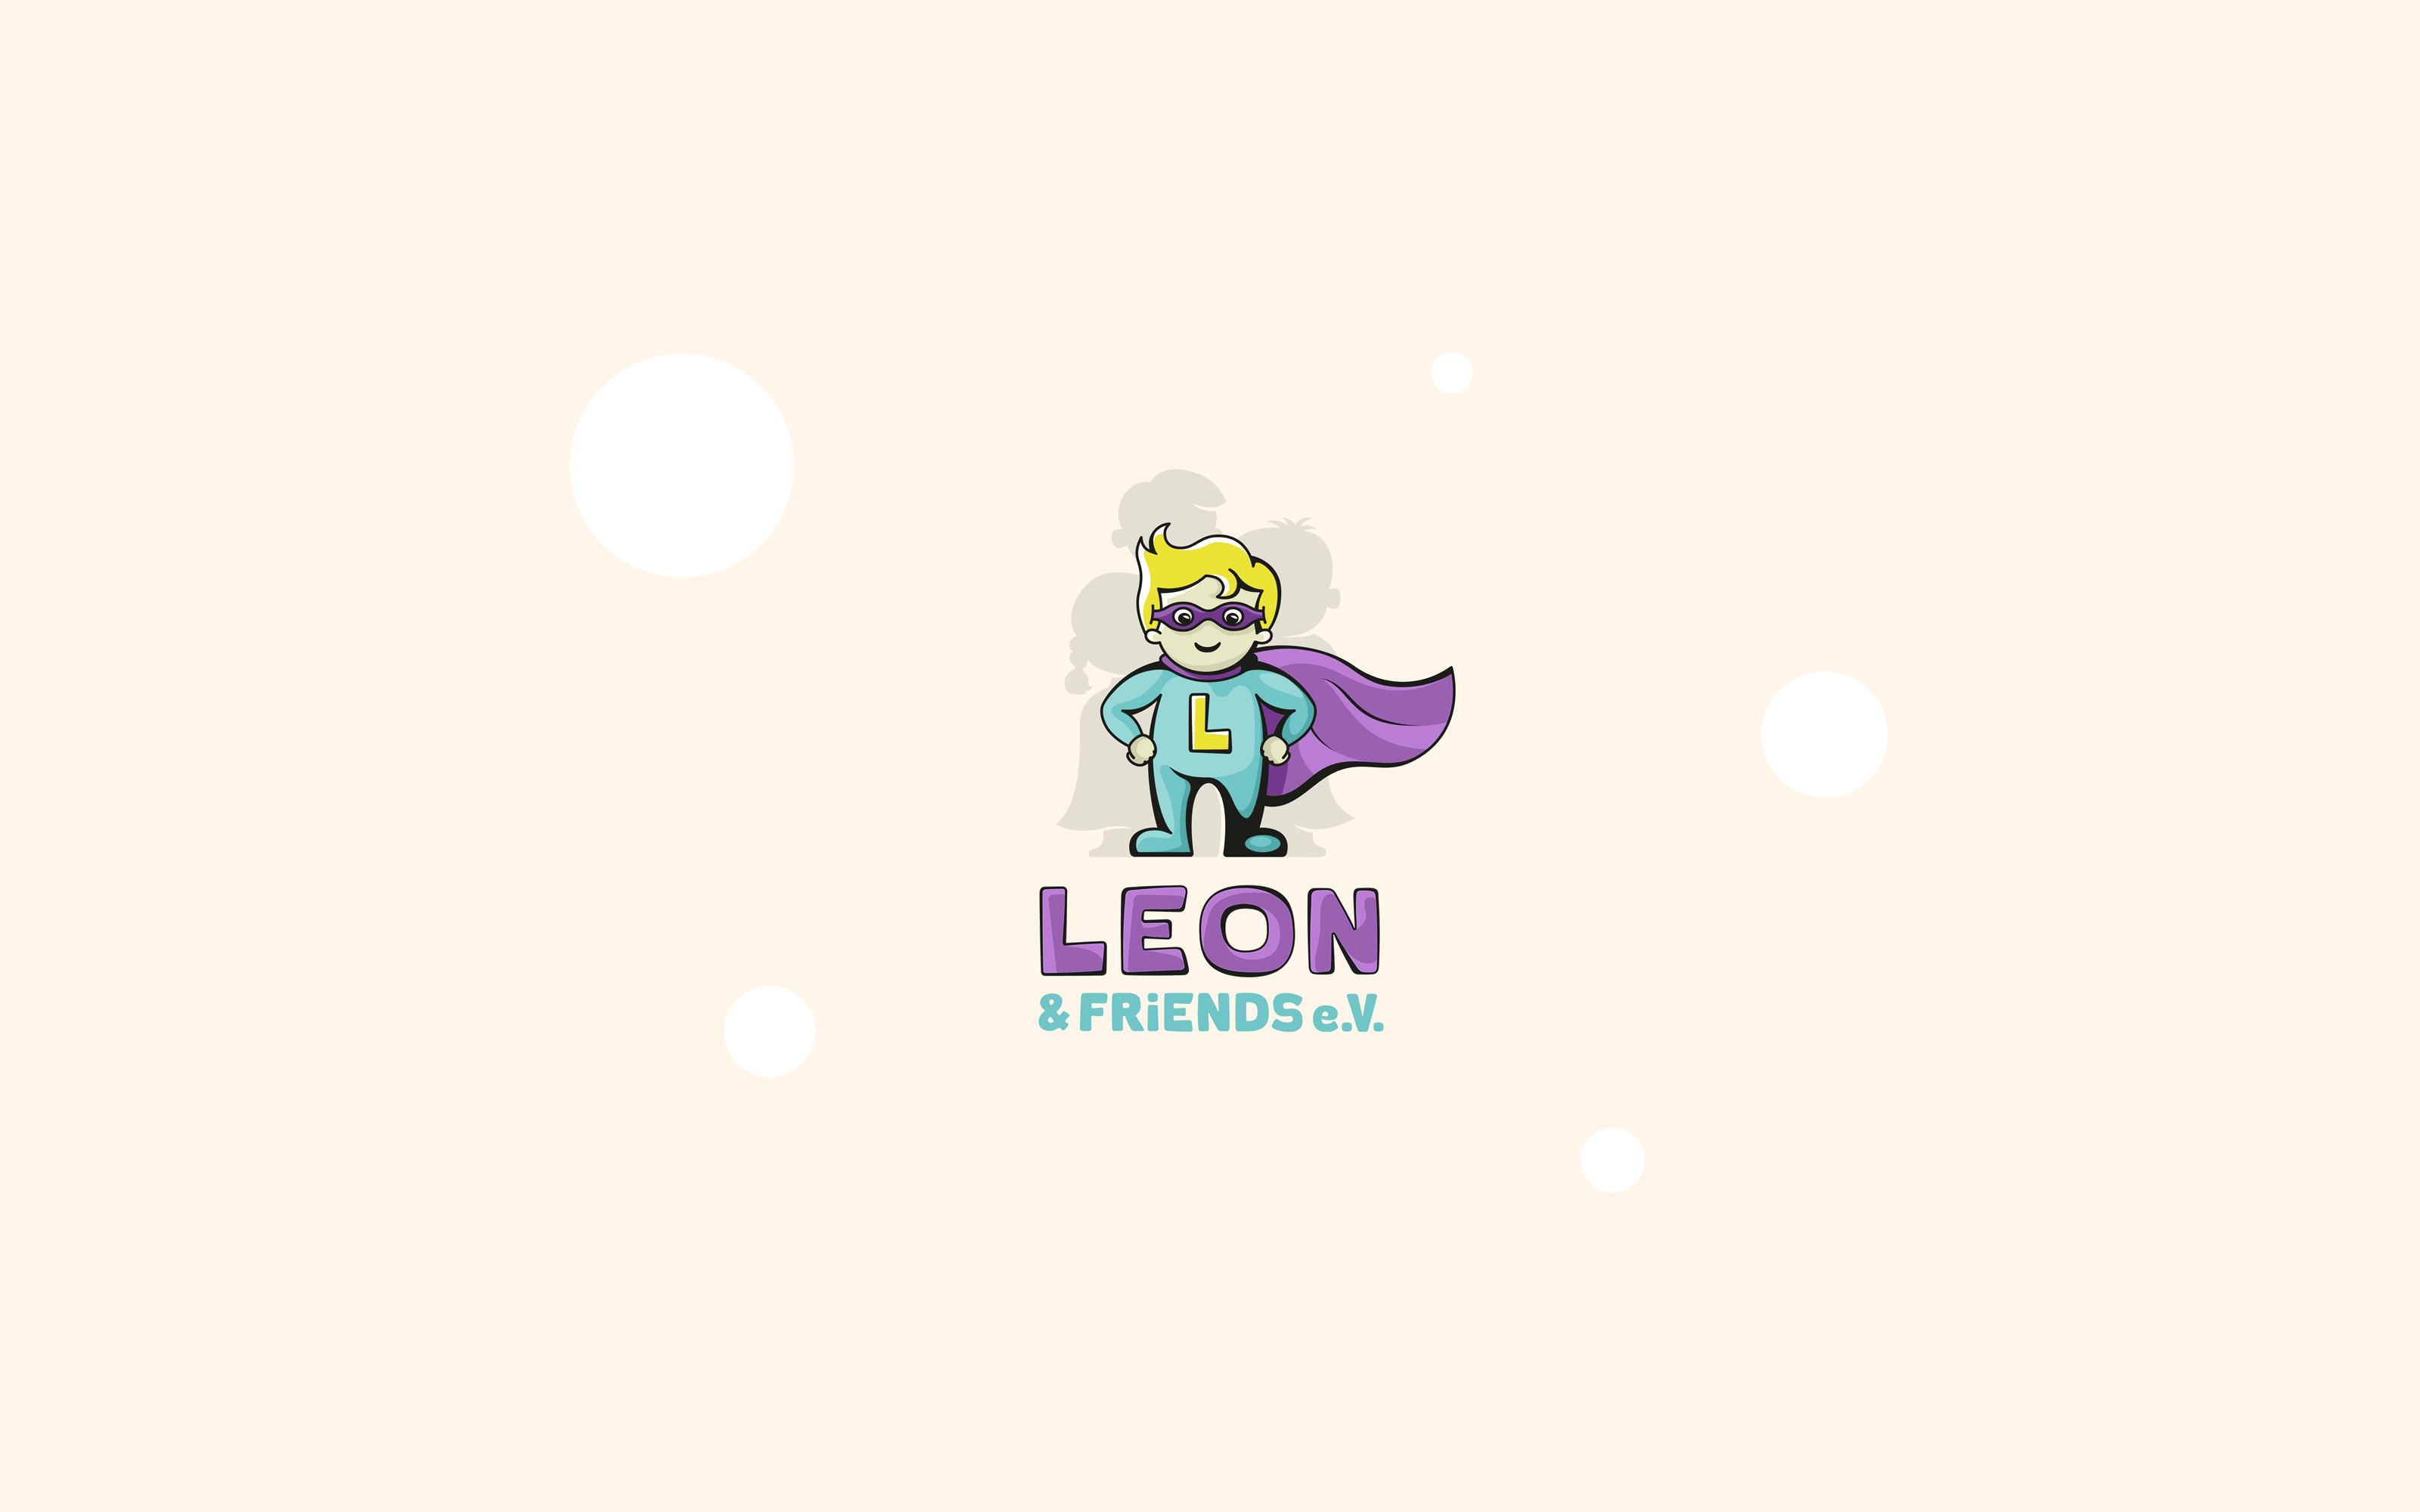 Leon & Friends